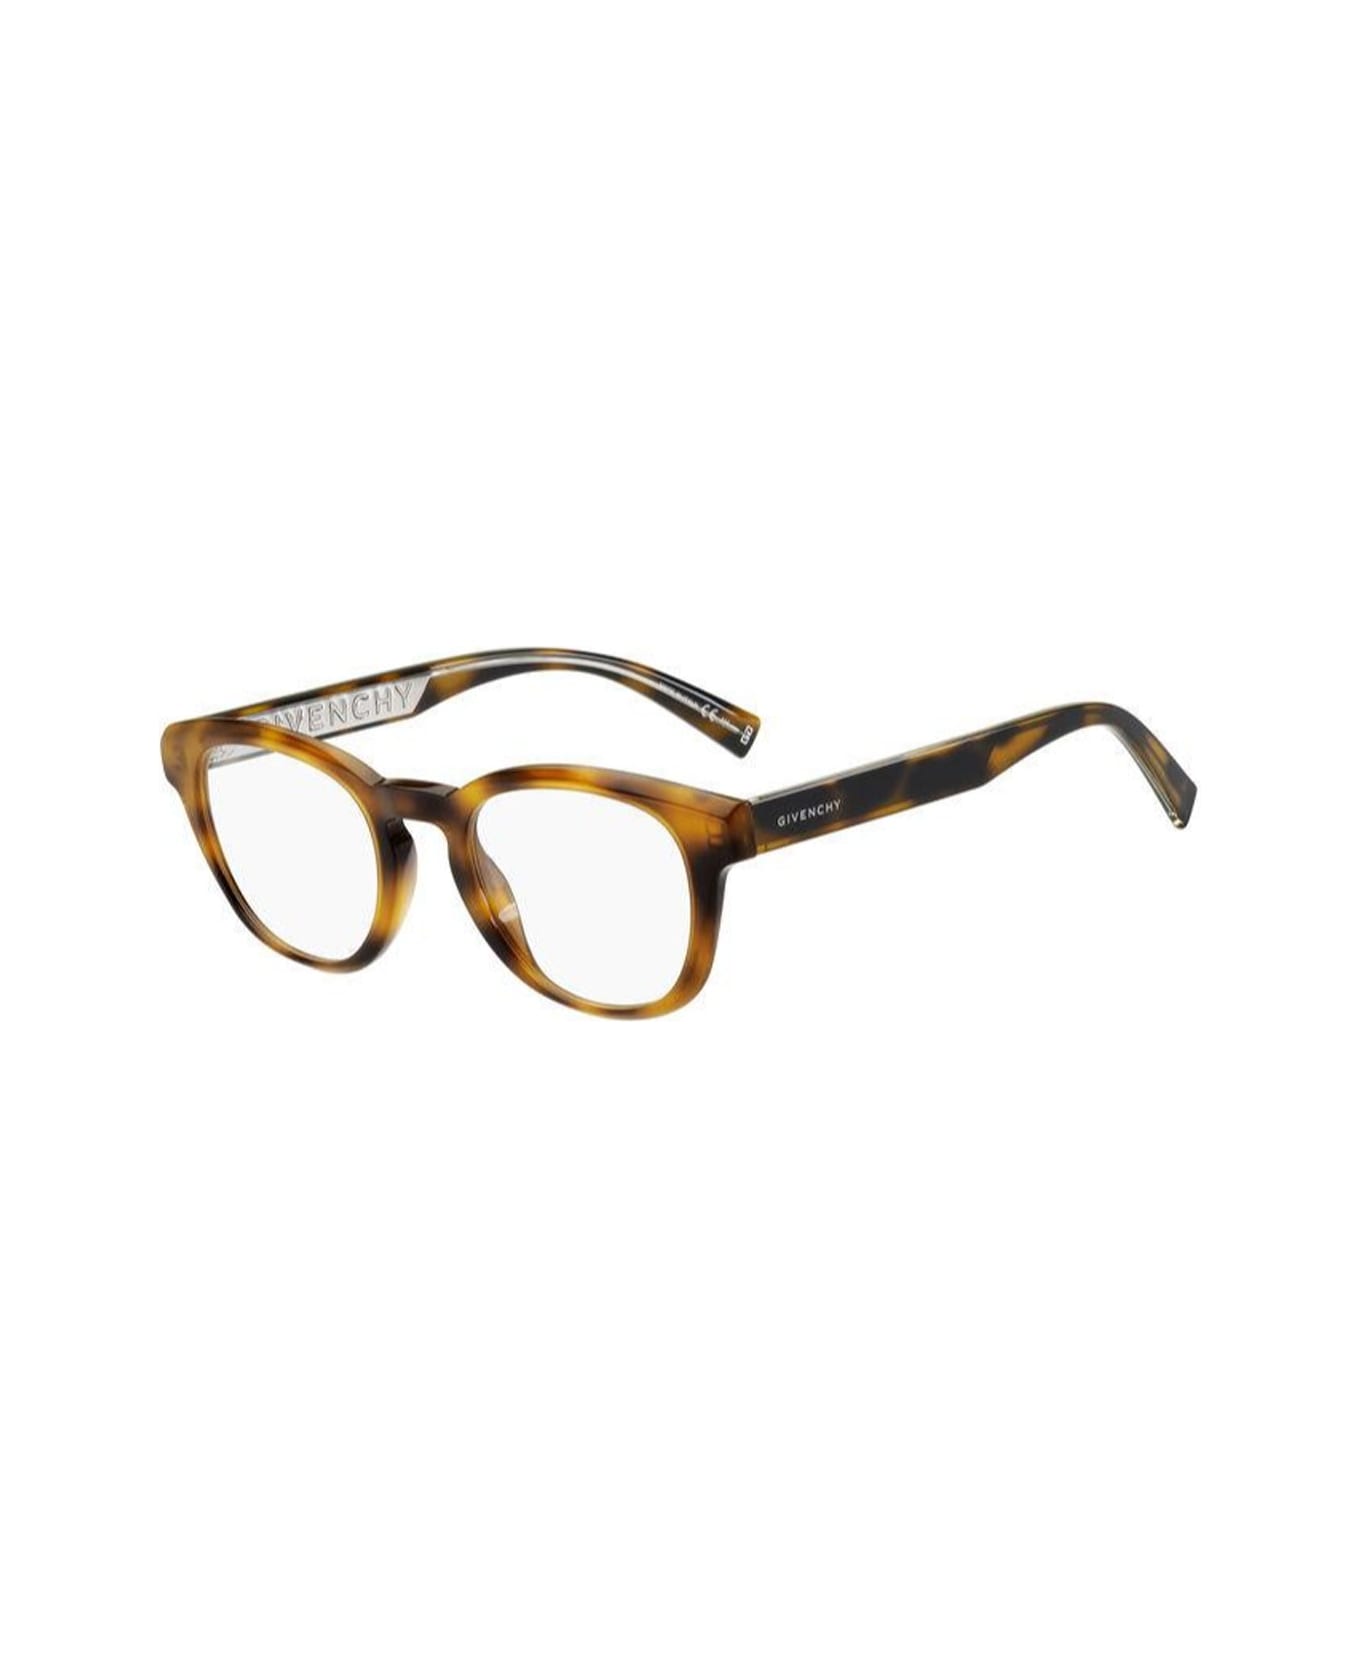 Givenchy Eyewear Gv 0156 Glasses - Marrone